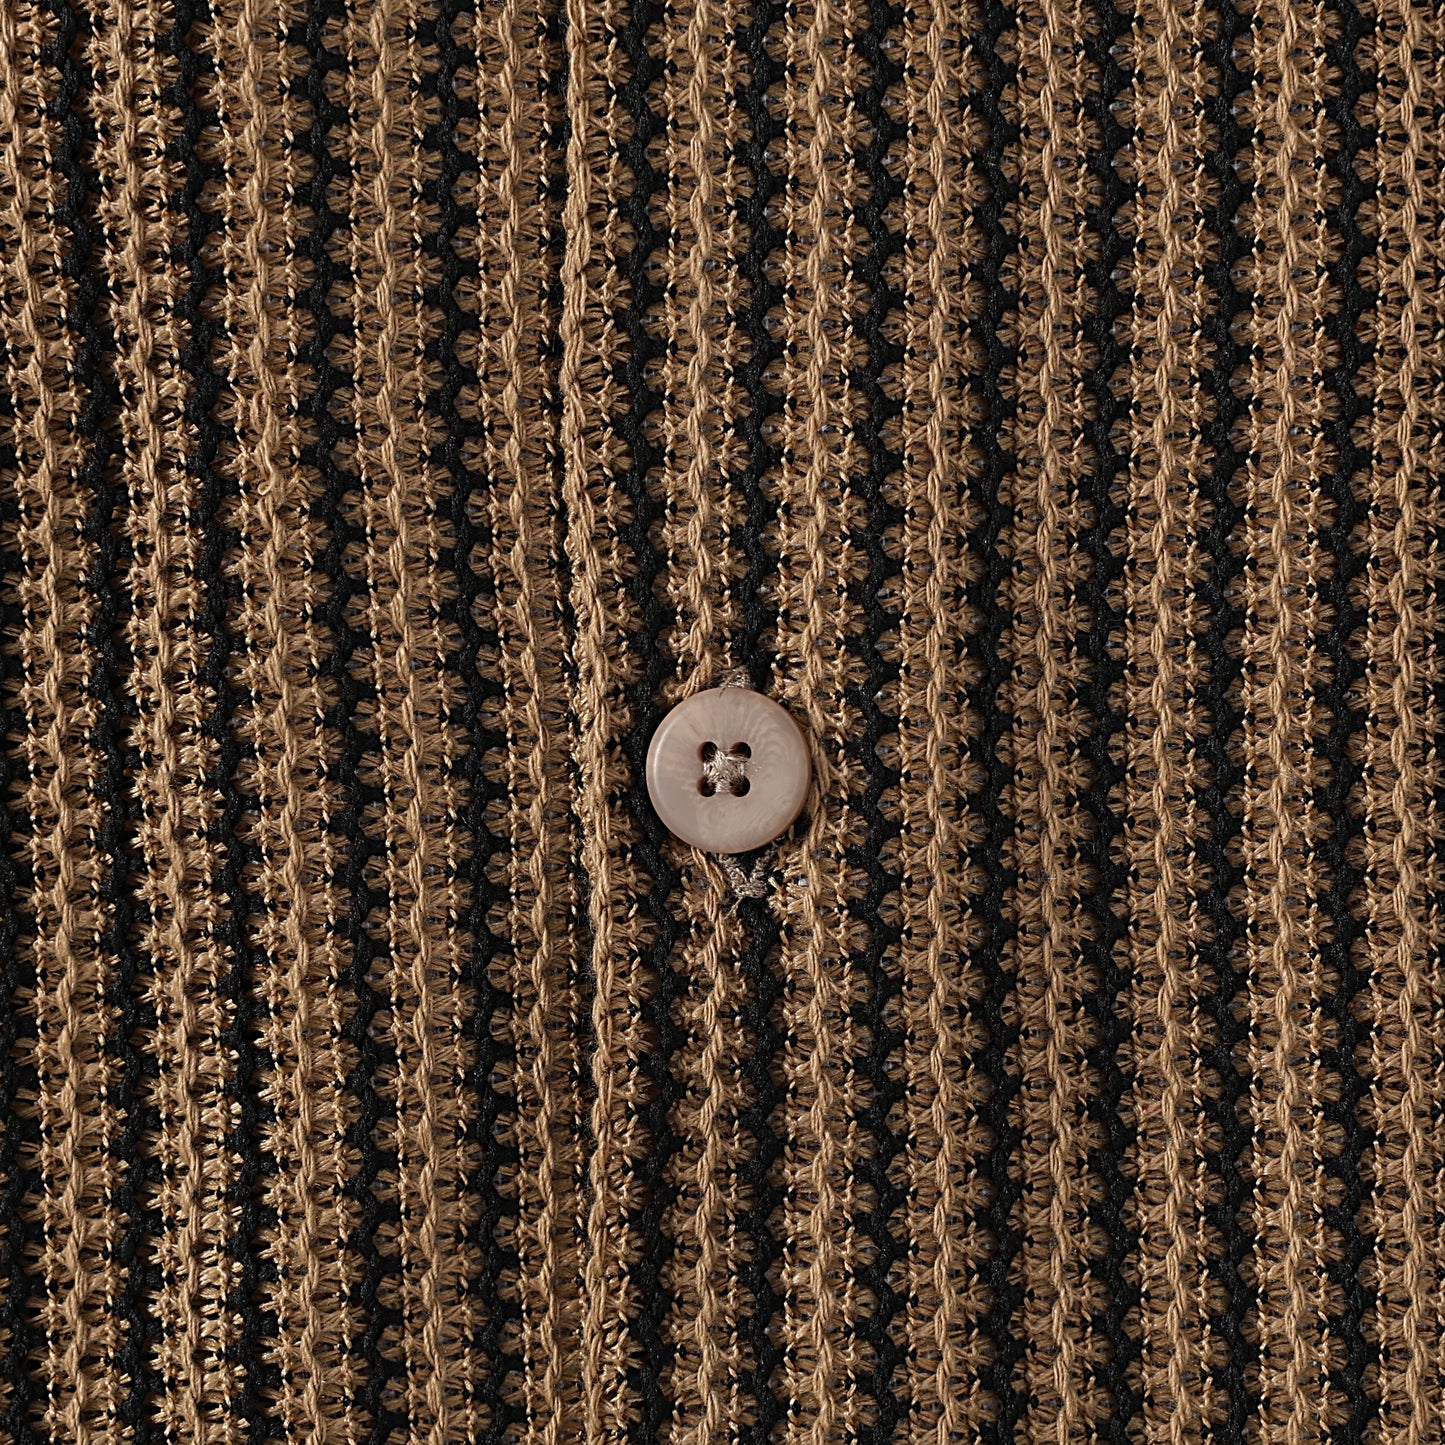 Brown Stripe Crochet Vintage Textured Camp Collar Shirt